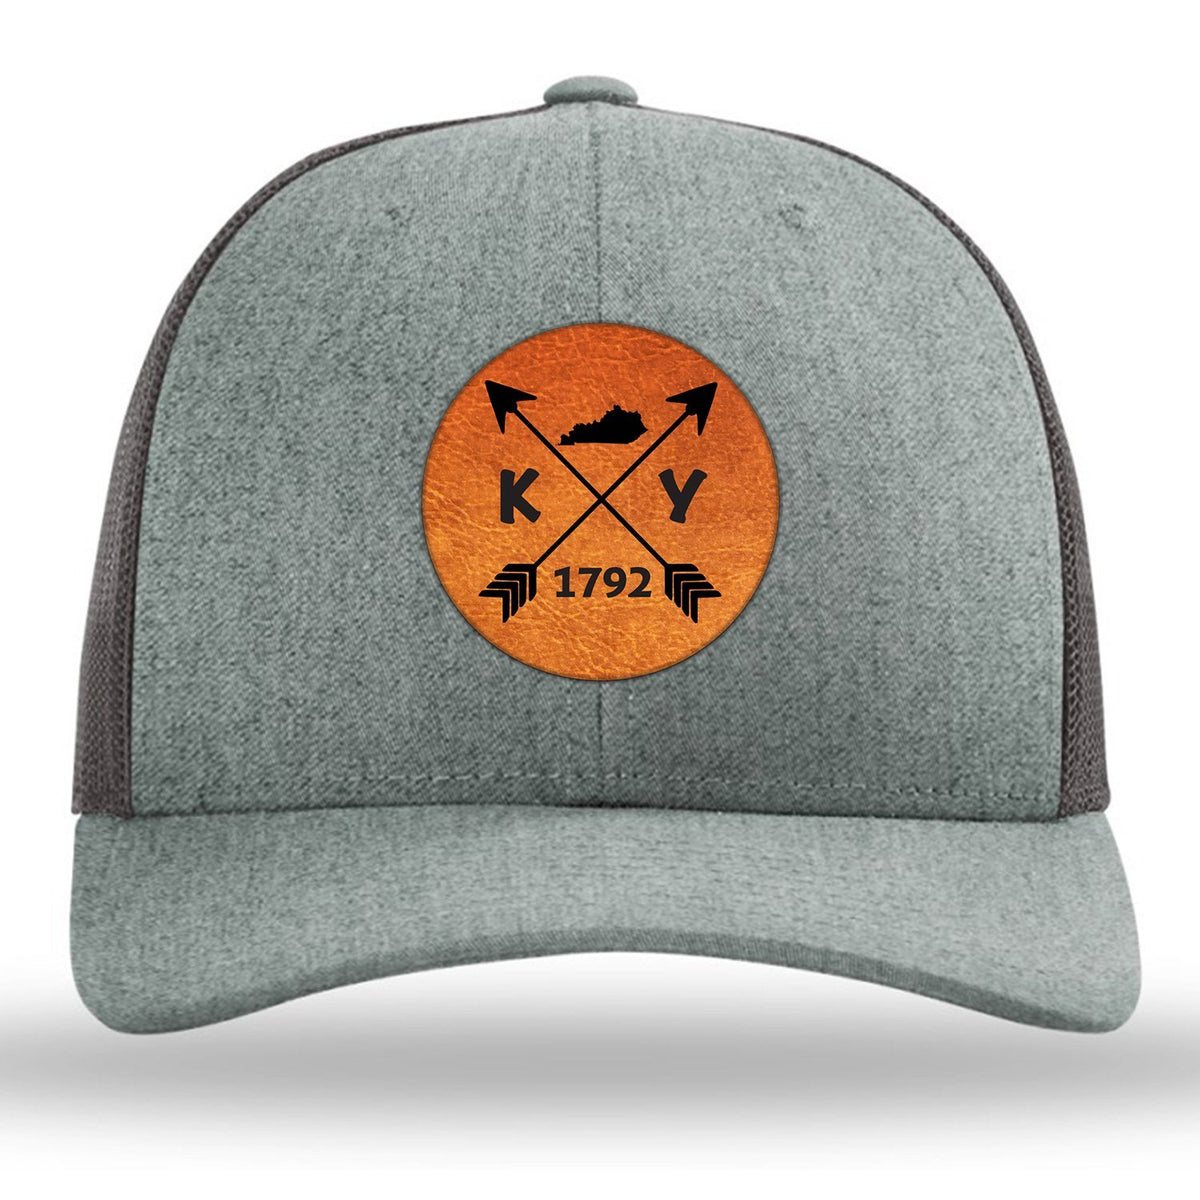 Kentucky State Arrows - Leather Patch Trucker Hat